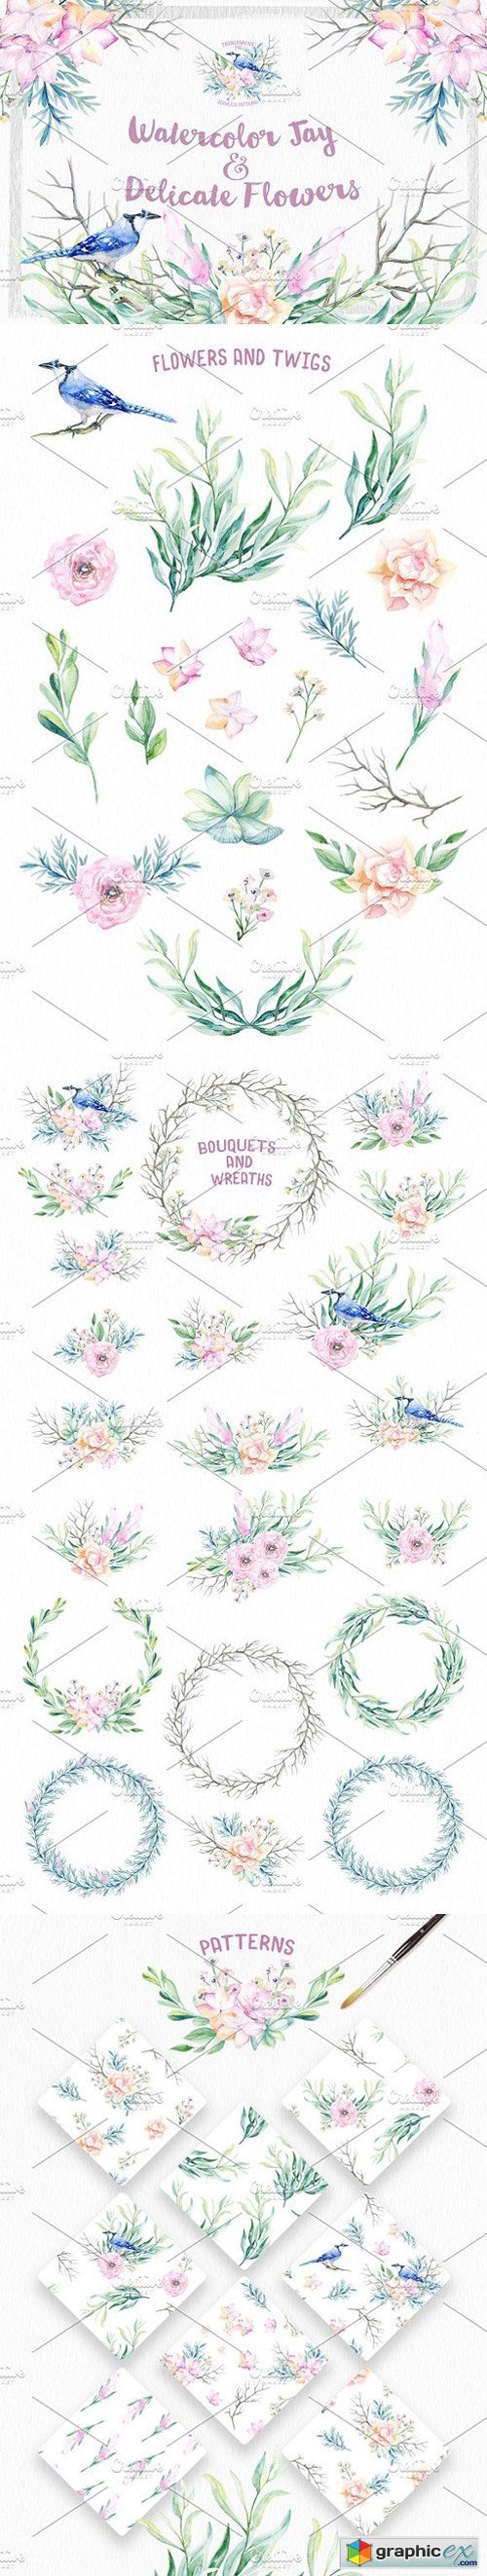 Watercolor Jay & Delicate Flowers